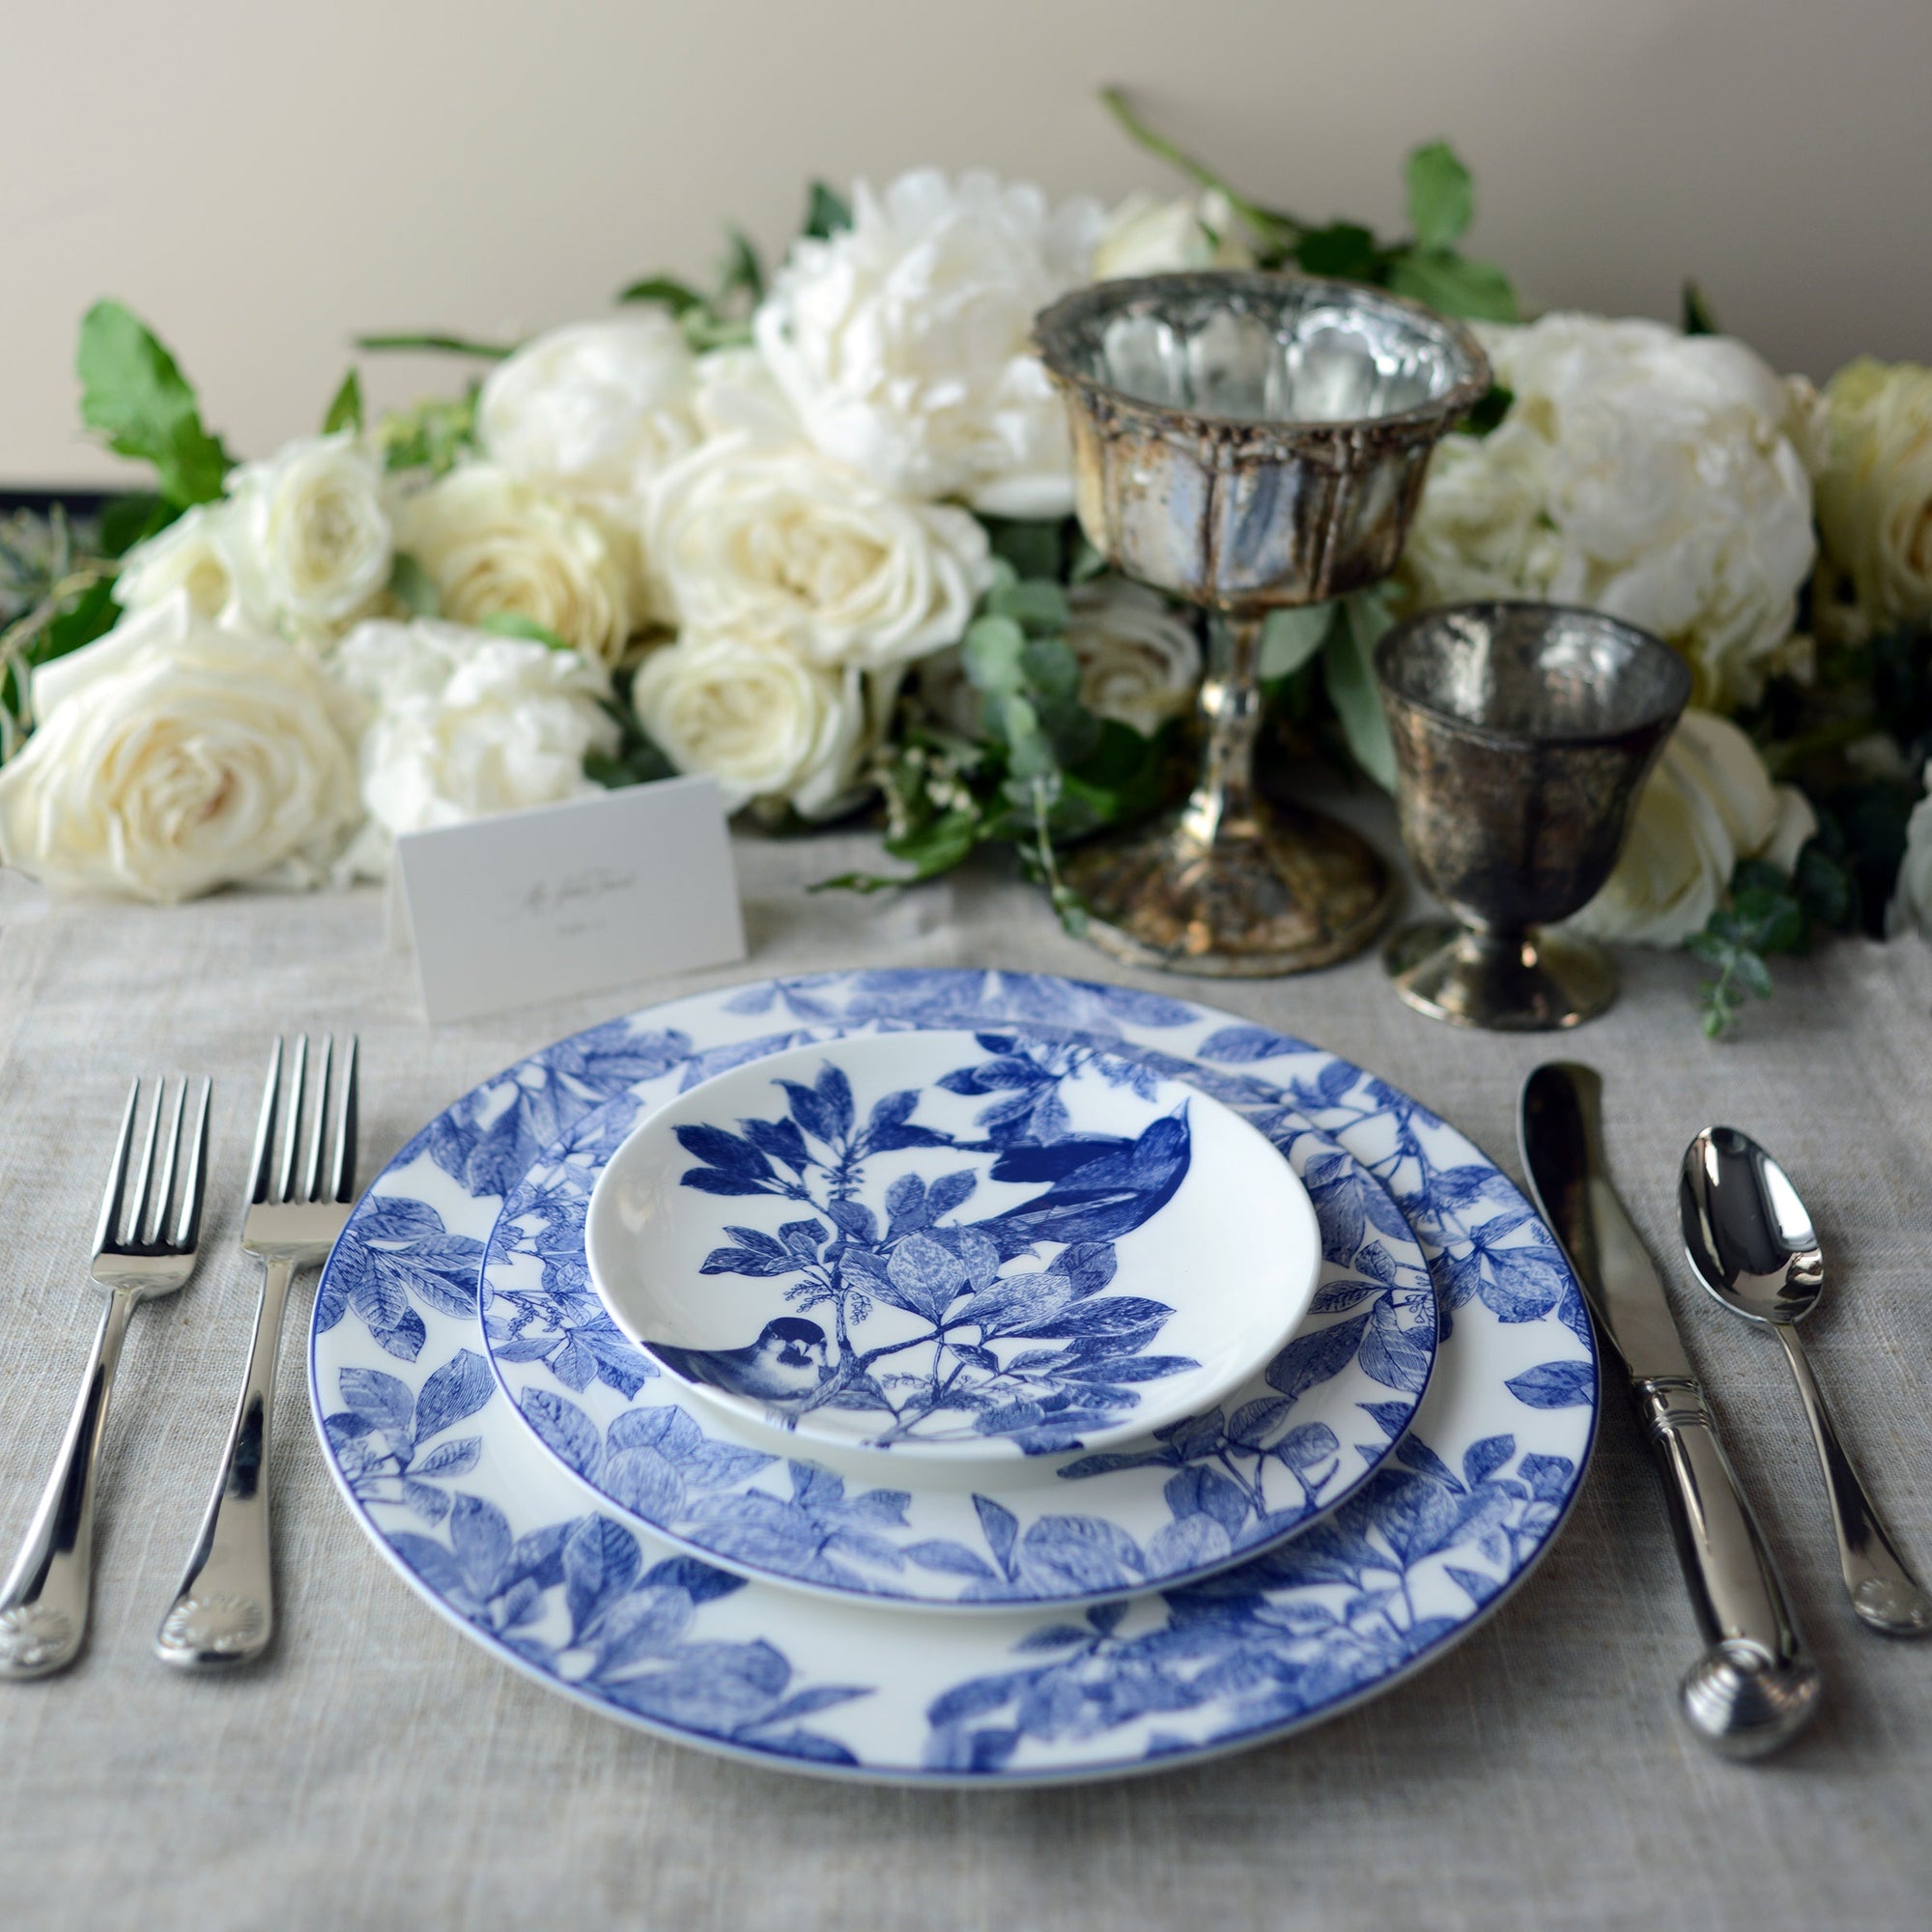 A premium porcelain Arbor Rimmed Salad Plate with blue botanical patterns around the rim, evokes an heirloom feel from Caskata Artisanal Home.